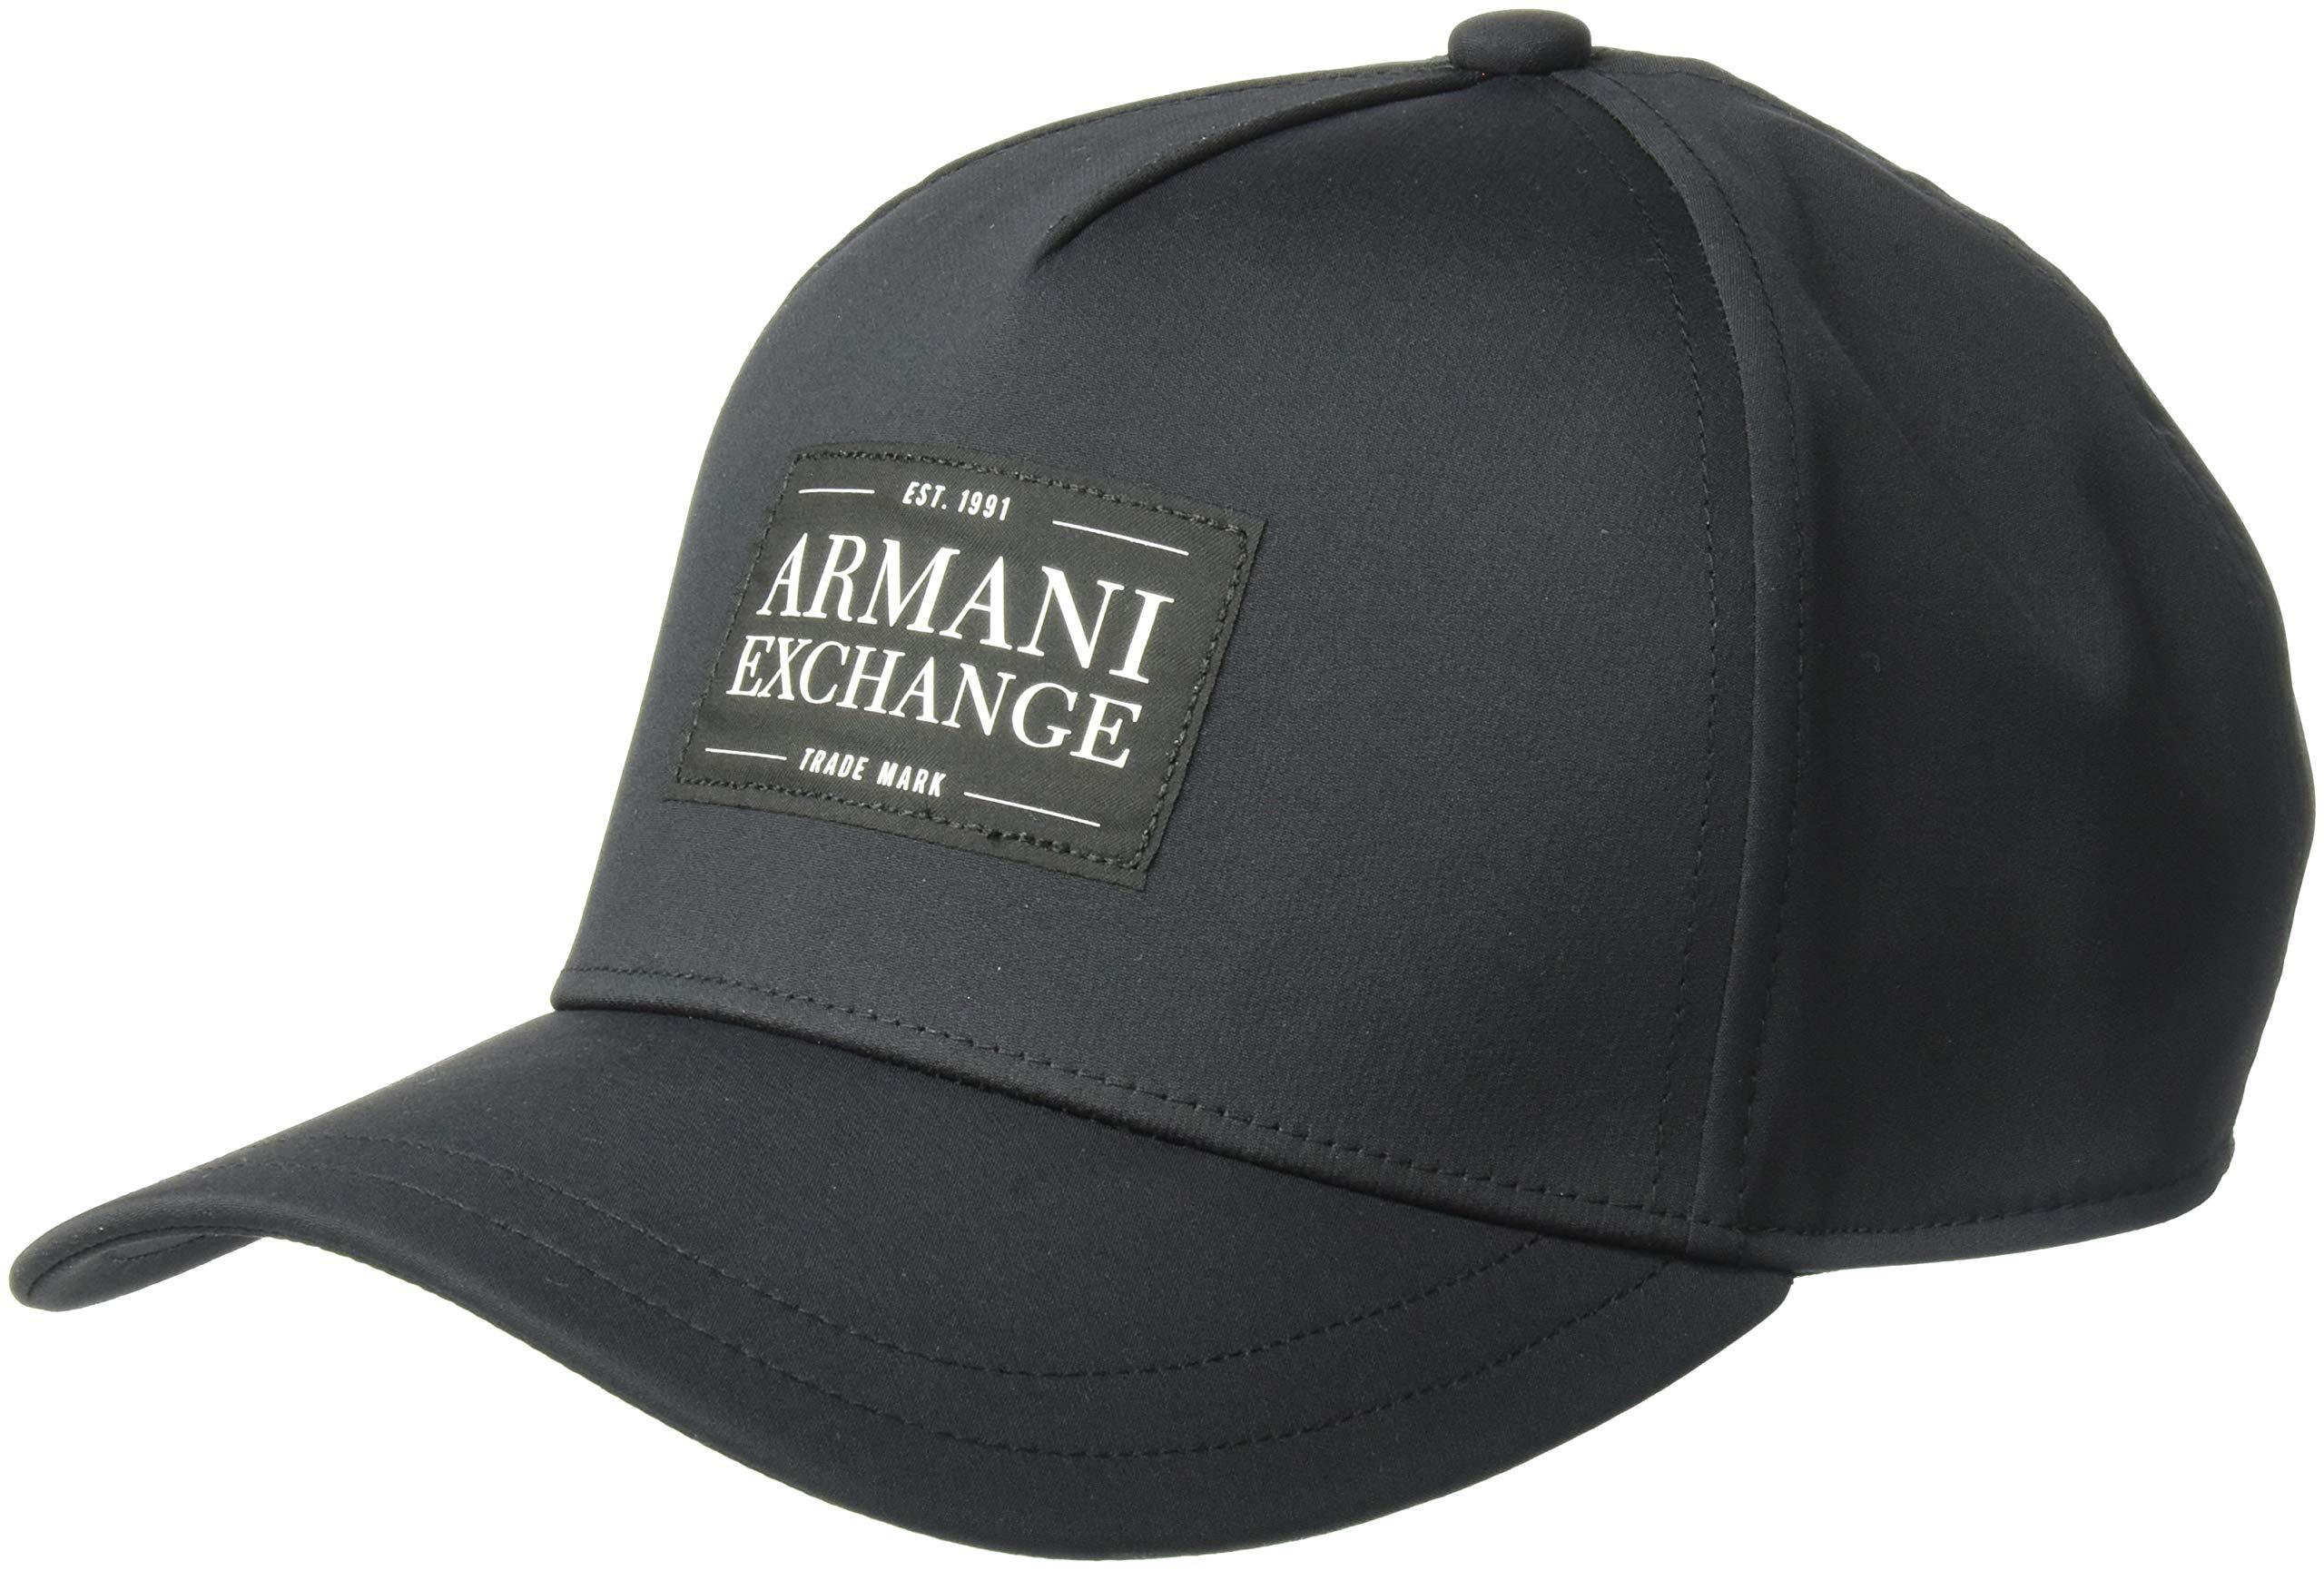 Armani Exchange Rmni Exchnge Ptch Logo Ht in Nero/Black (Black) for Men -  Lyst